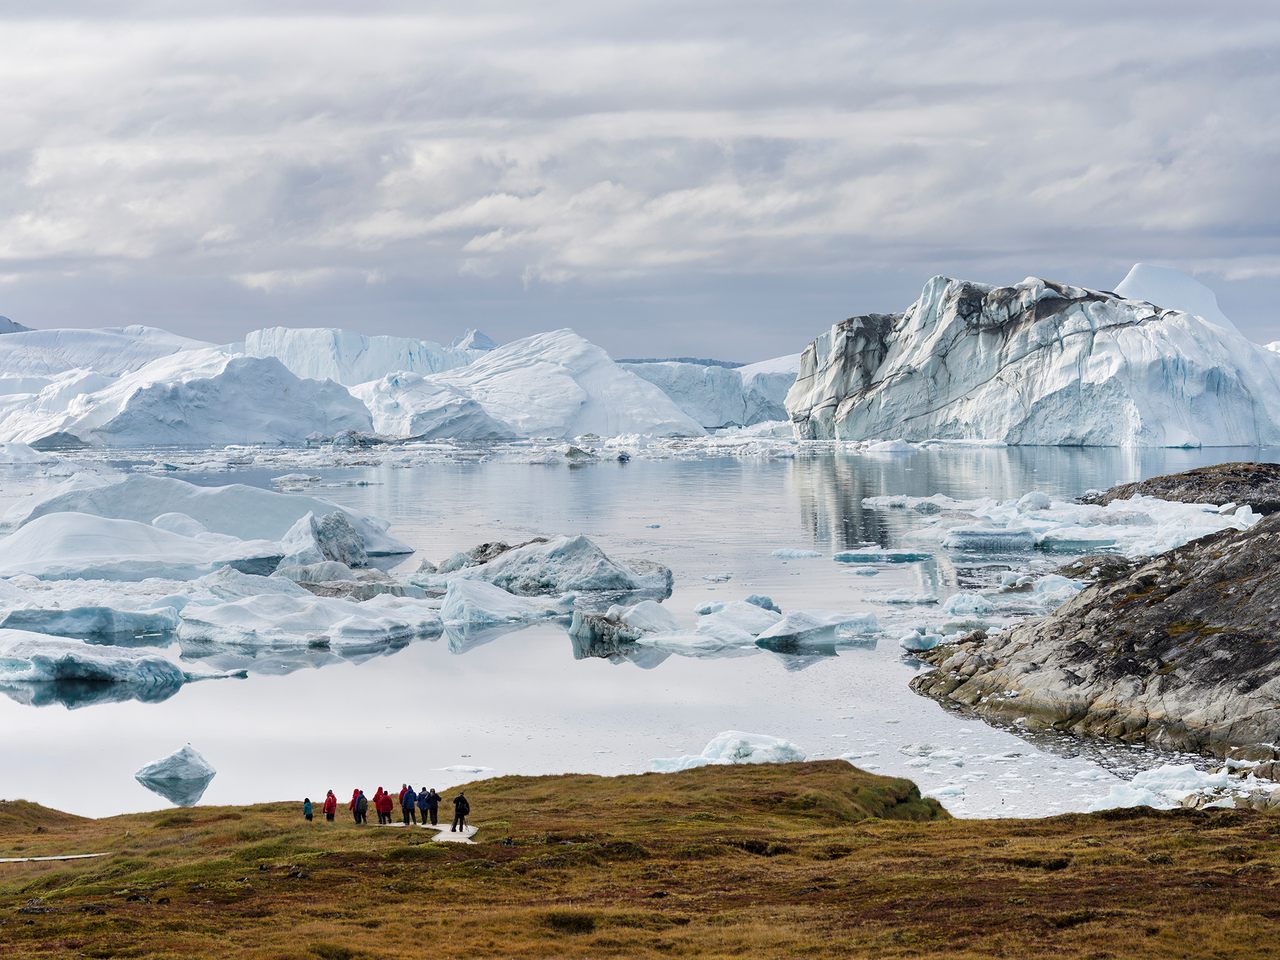 Tourists admiring the Ilulissat Icefjord.